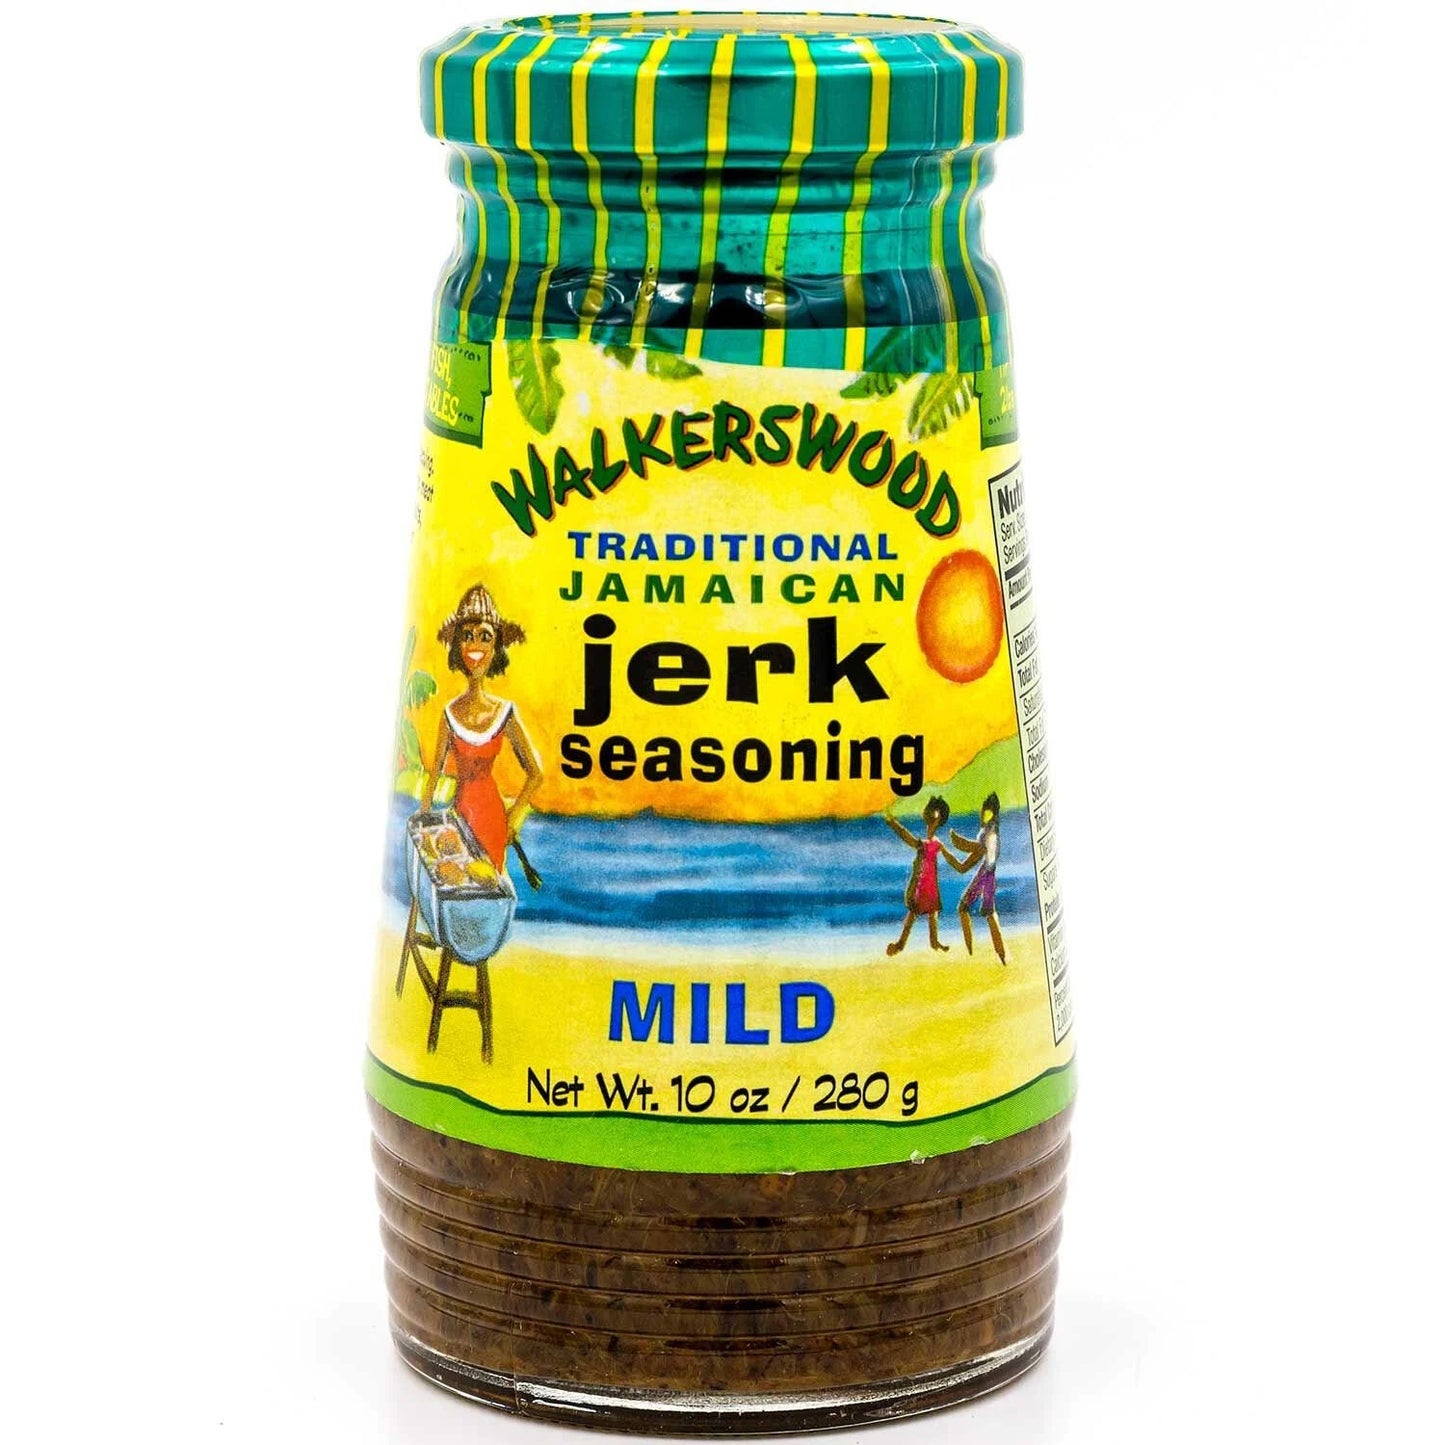 Walkerswood Traditional Jamaican Jerk Seasoning Mild 10oz